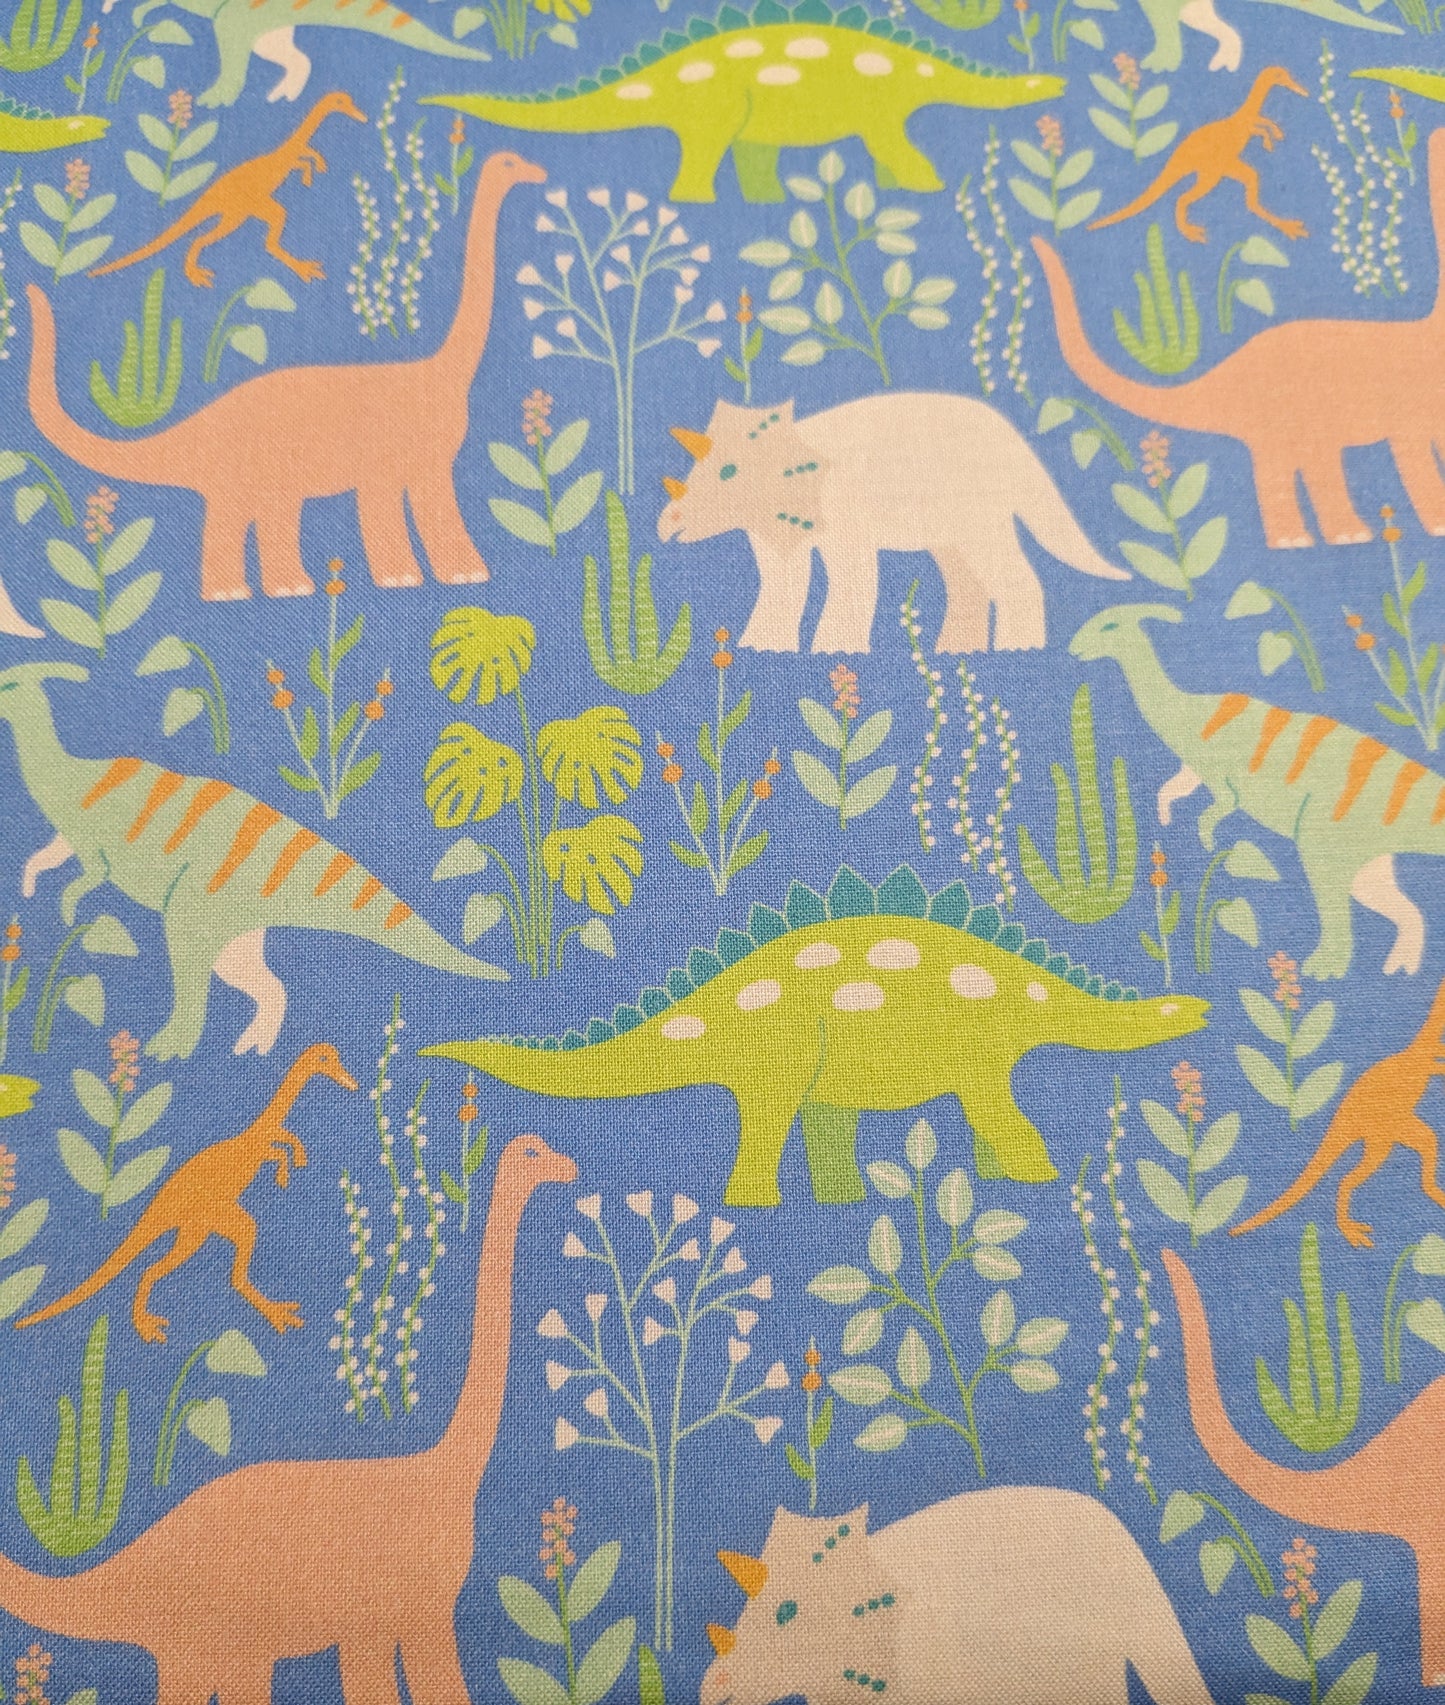 Paintbrush Studio Fabrics - Dinosaur stories - Blue